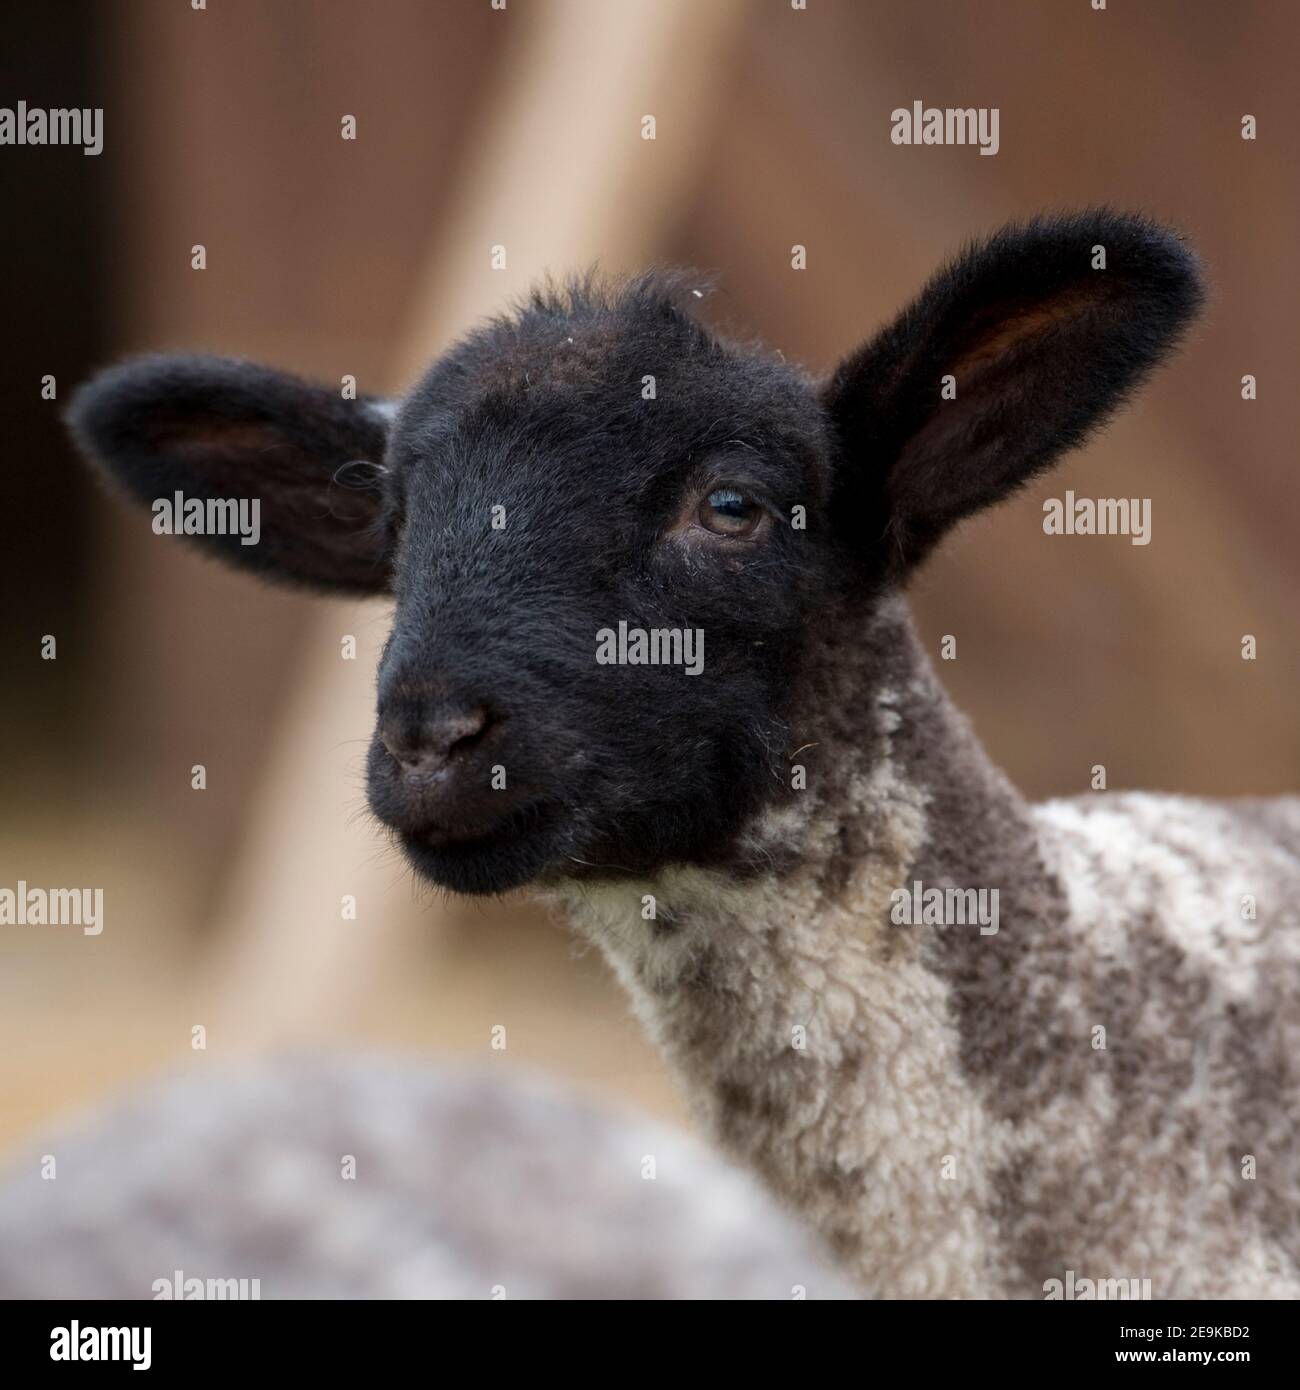 lamb, sheep Stock Photo